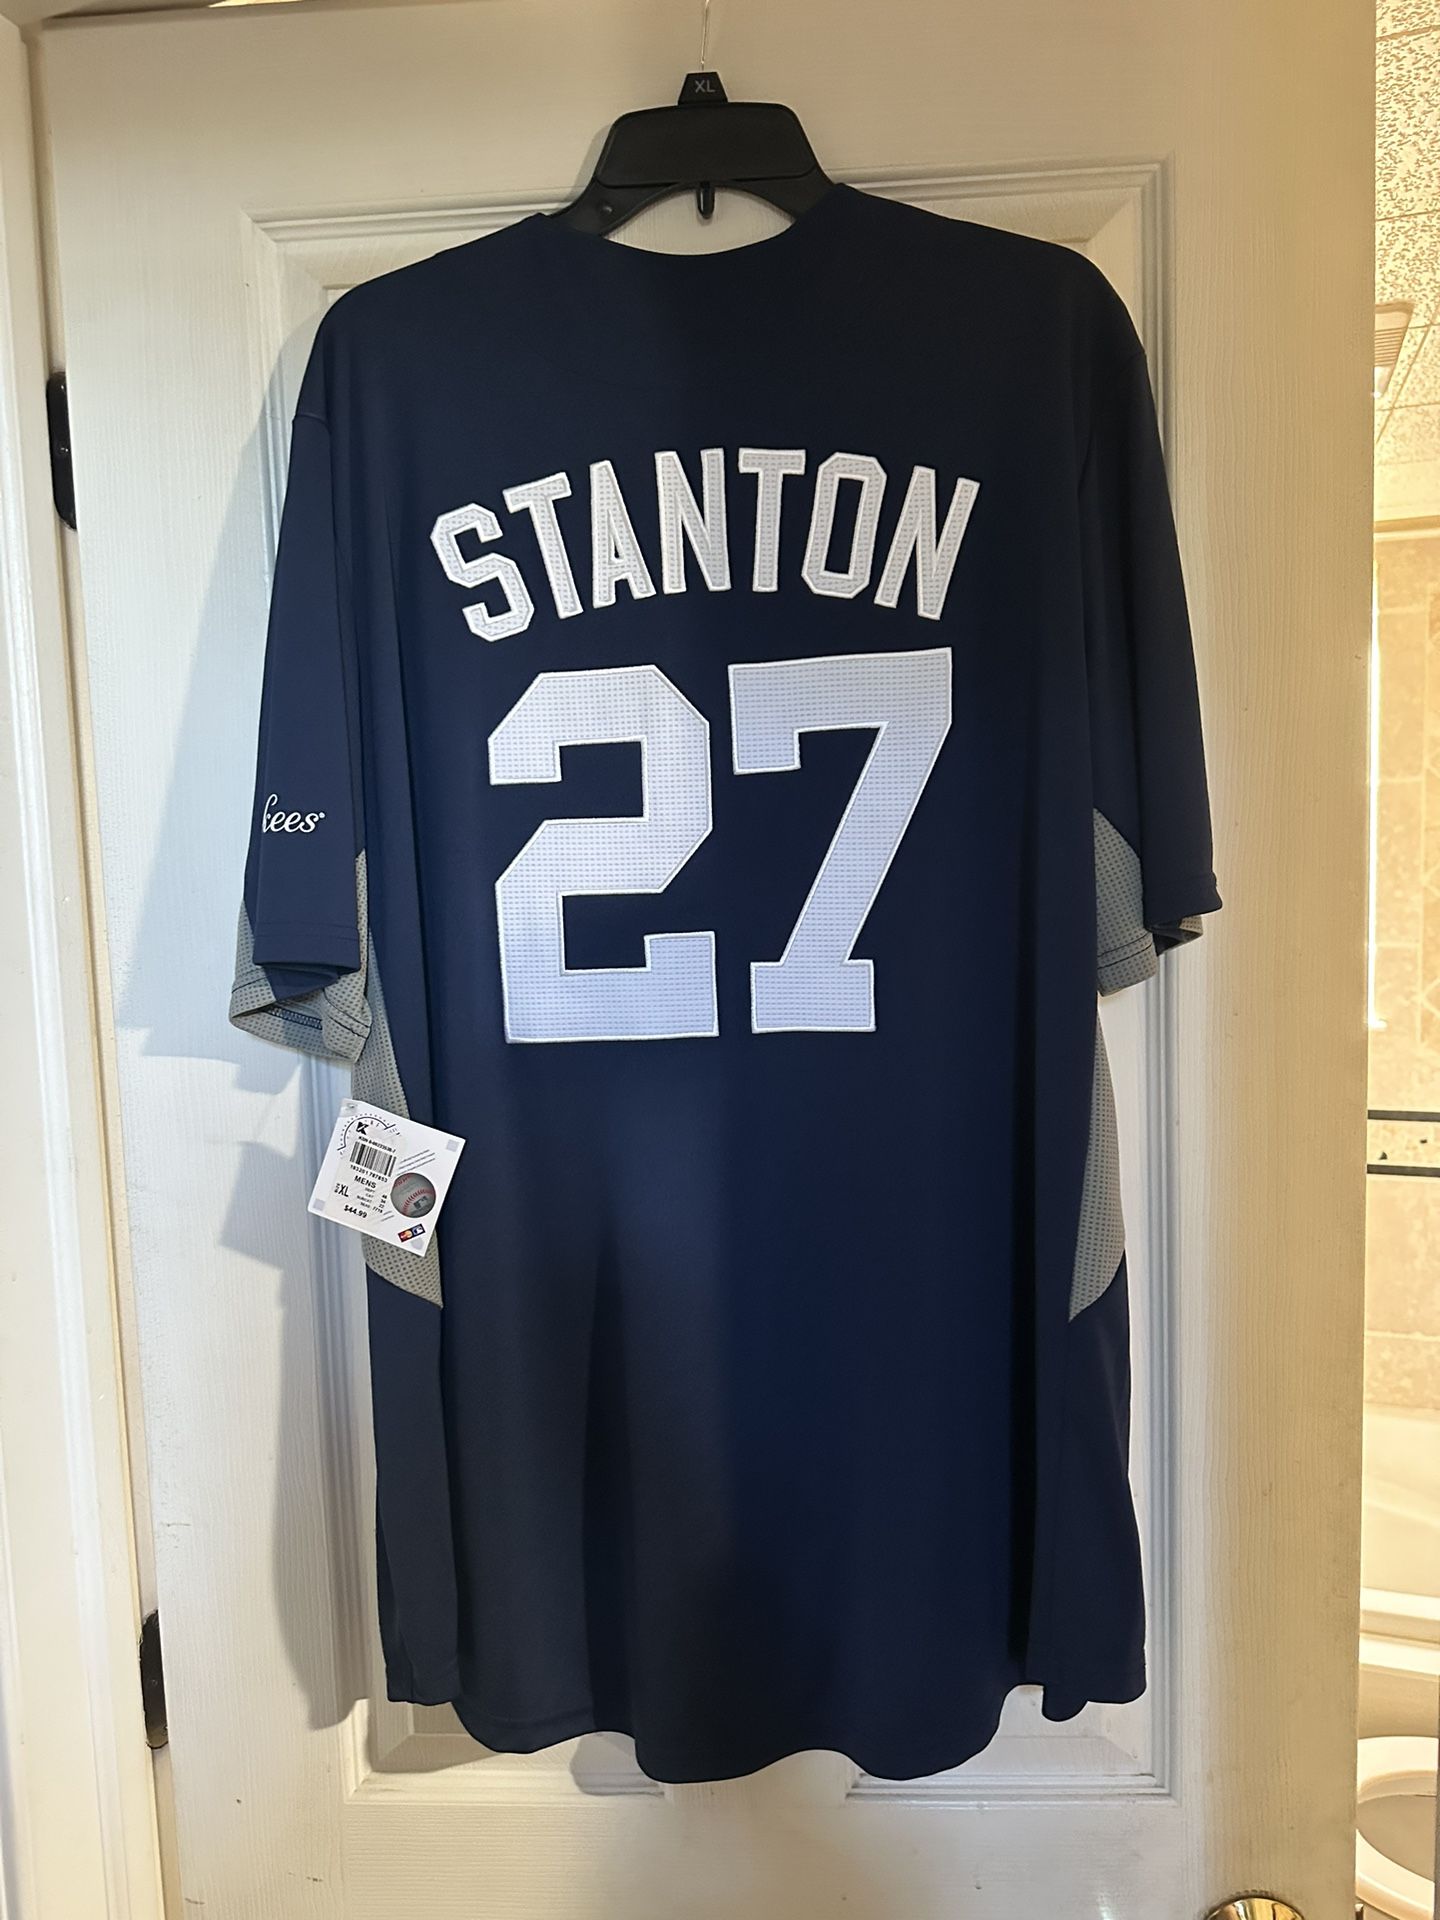 G Stanton Yankees Jersey